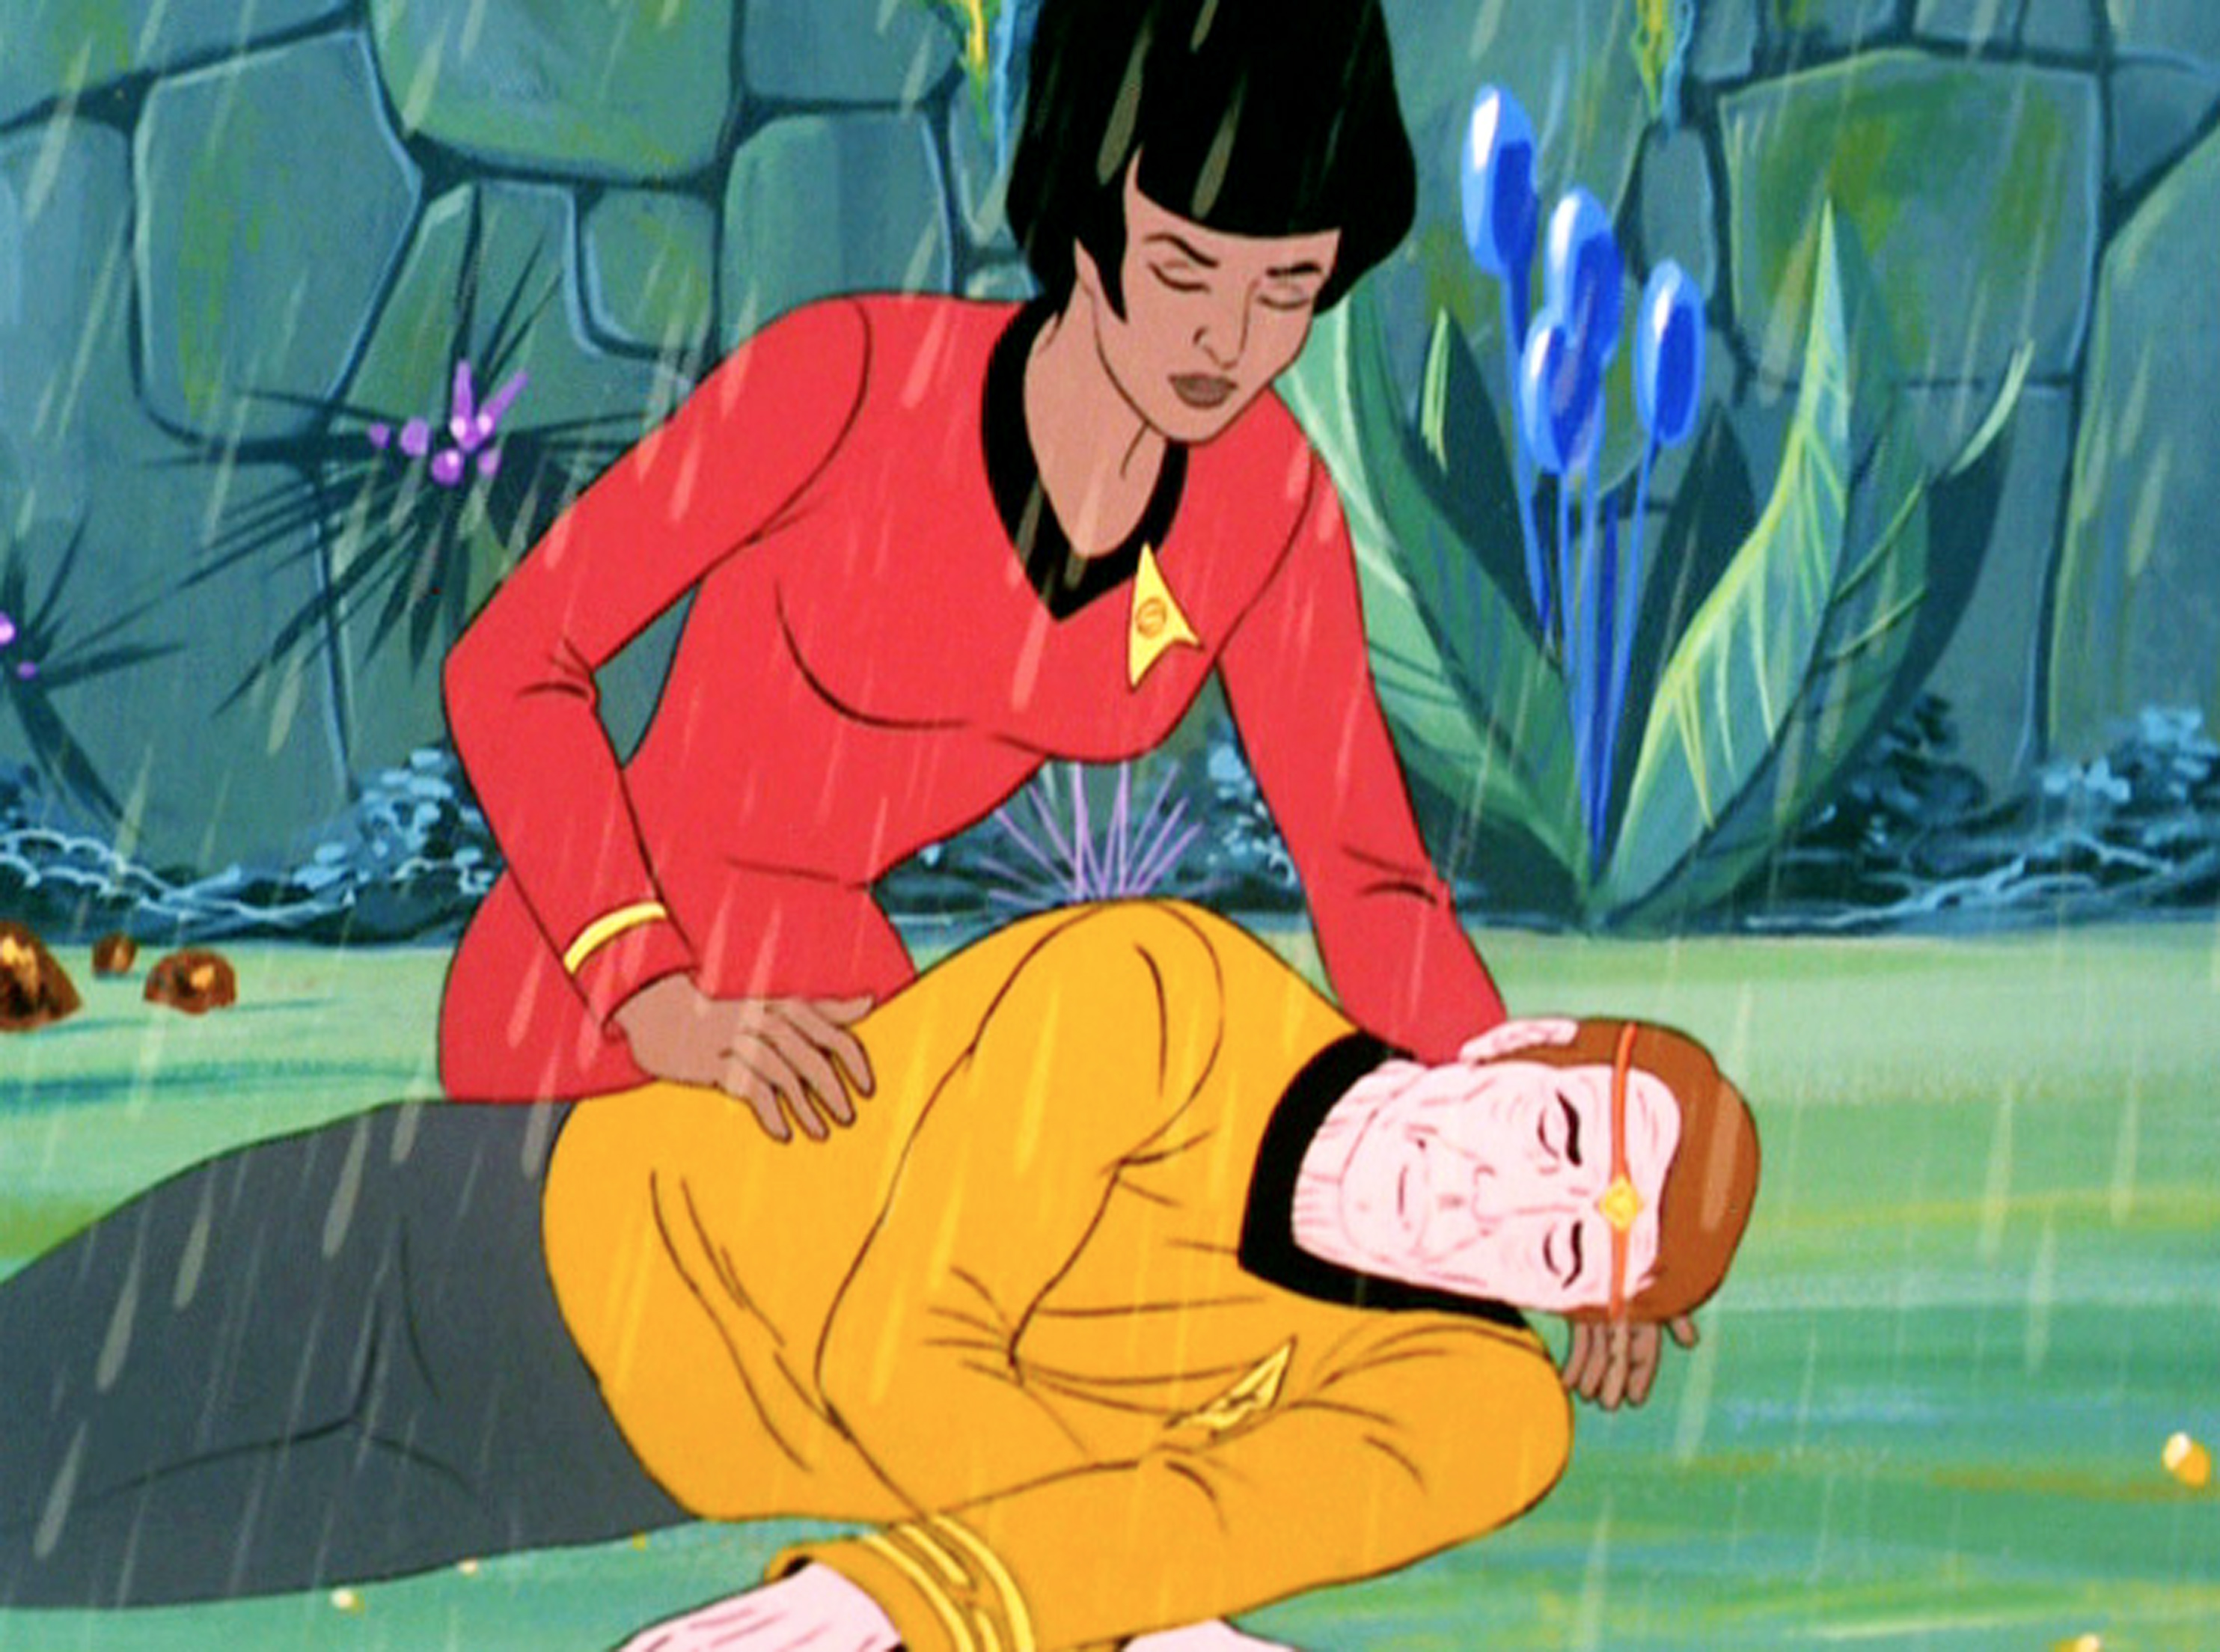 LOS ANGELES - SEPTEMBER 29: Uhura rescues a weakened Captain Kirk in Star Trek: The Animated Series episode, "The Lorelei Signal." Original air date, September 29, 1973. Image is a screen grab. (Photo by CBS via Getty Images) (CBS Photo Archive—CBS via Getty Images)